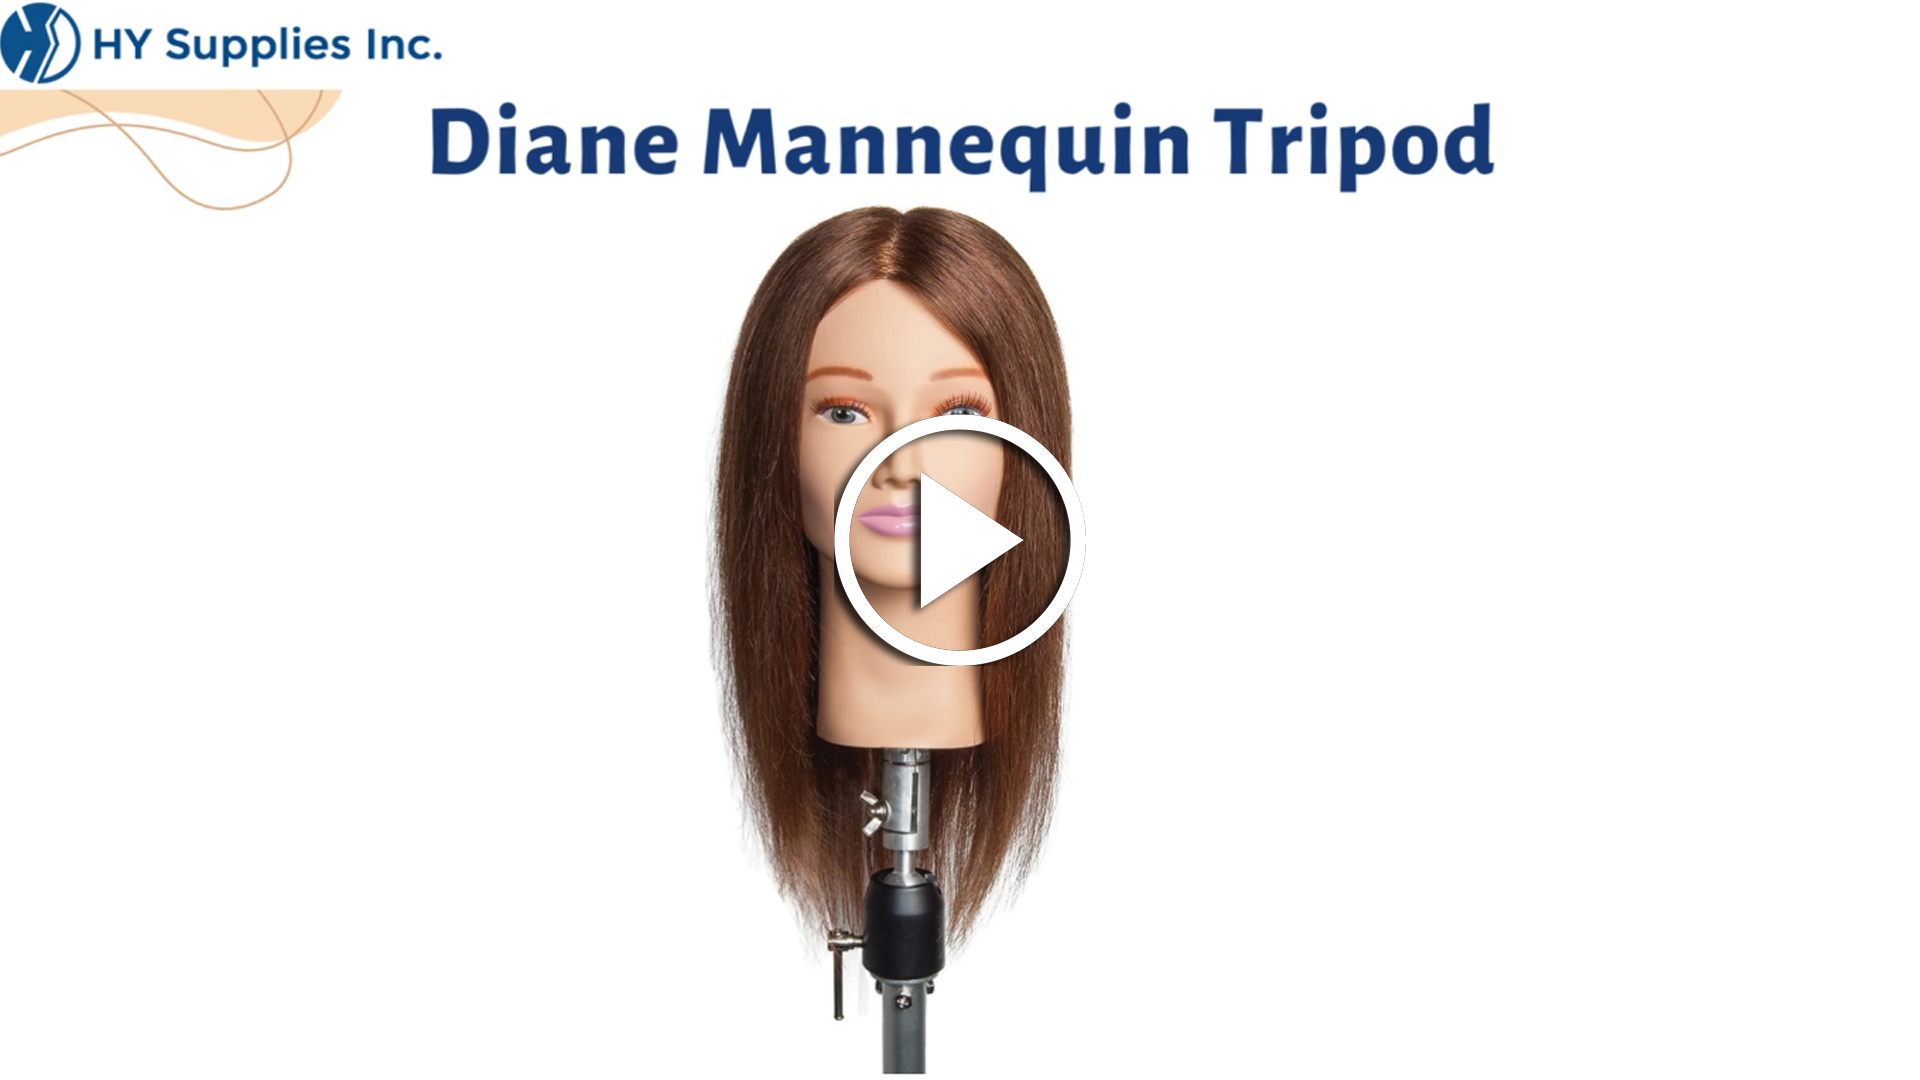 Diane Mannequin Tripod